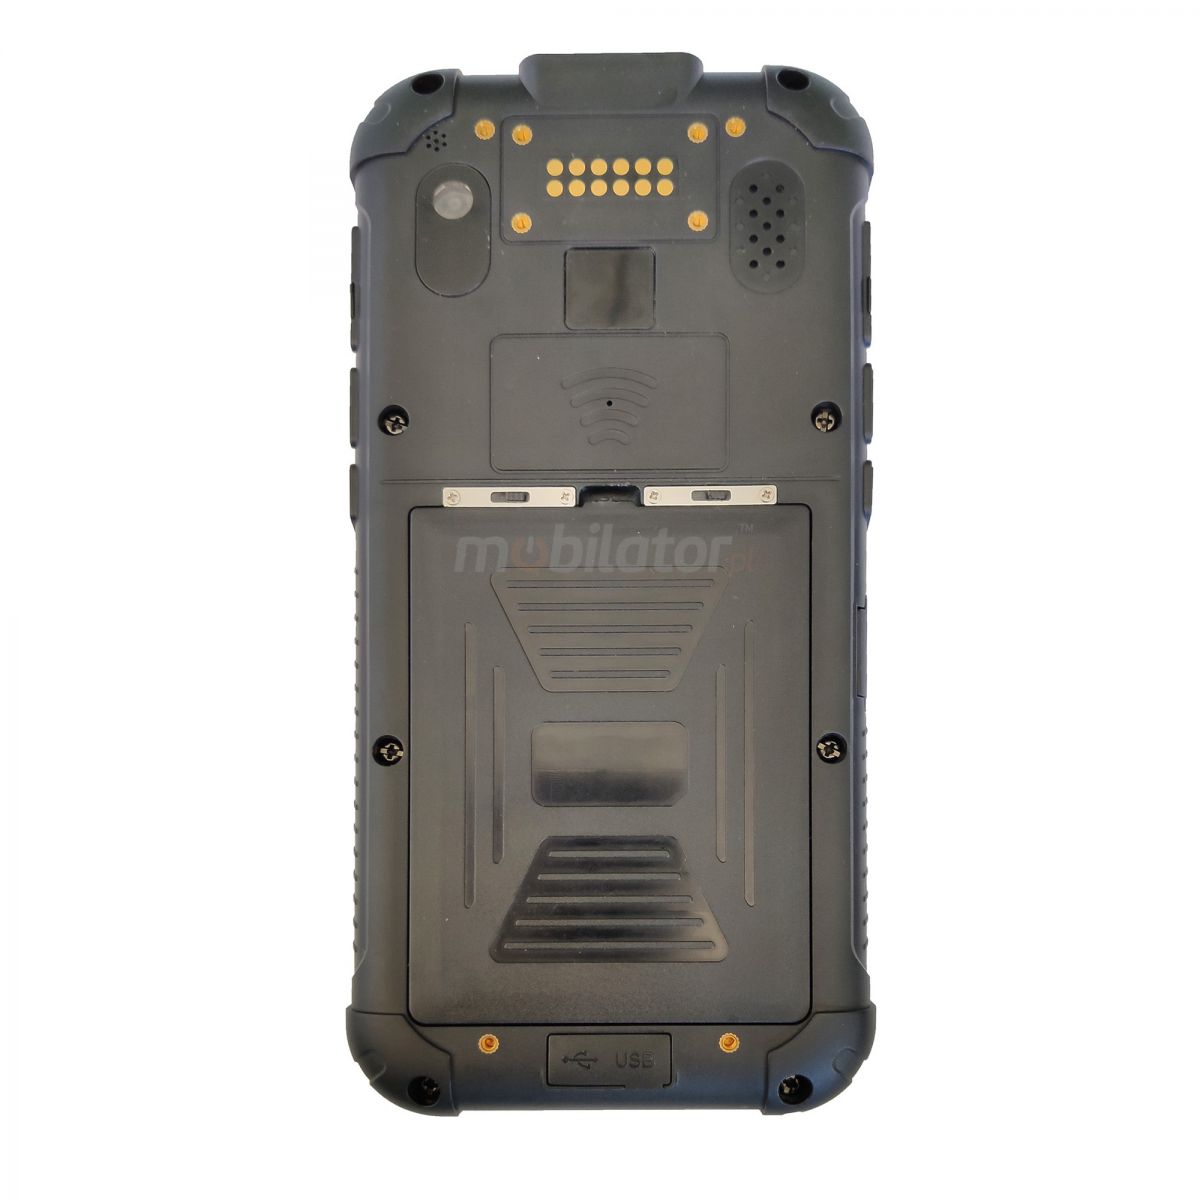 Mobipad SH5 v.4 - Terminal danych ze skanerem UHF RFID M500, NFC , 4G i Bluetooth 4.0, skanerem kodw 2D